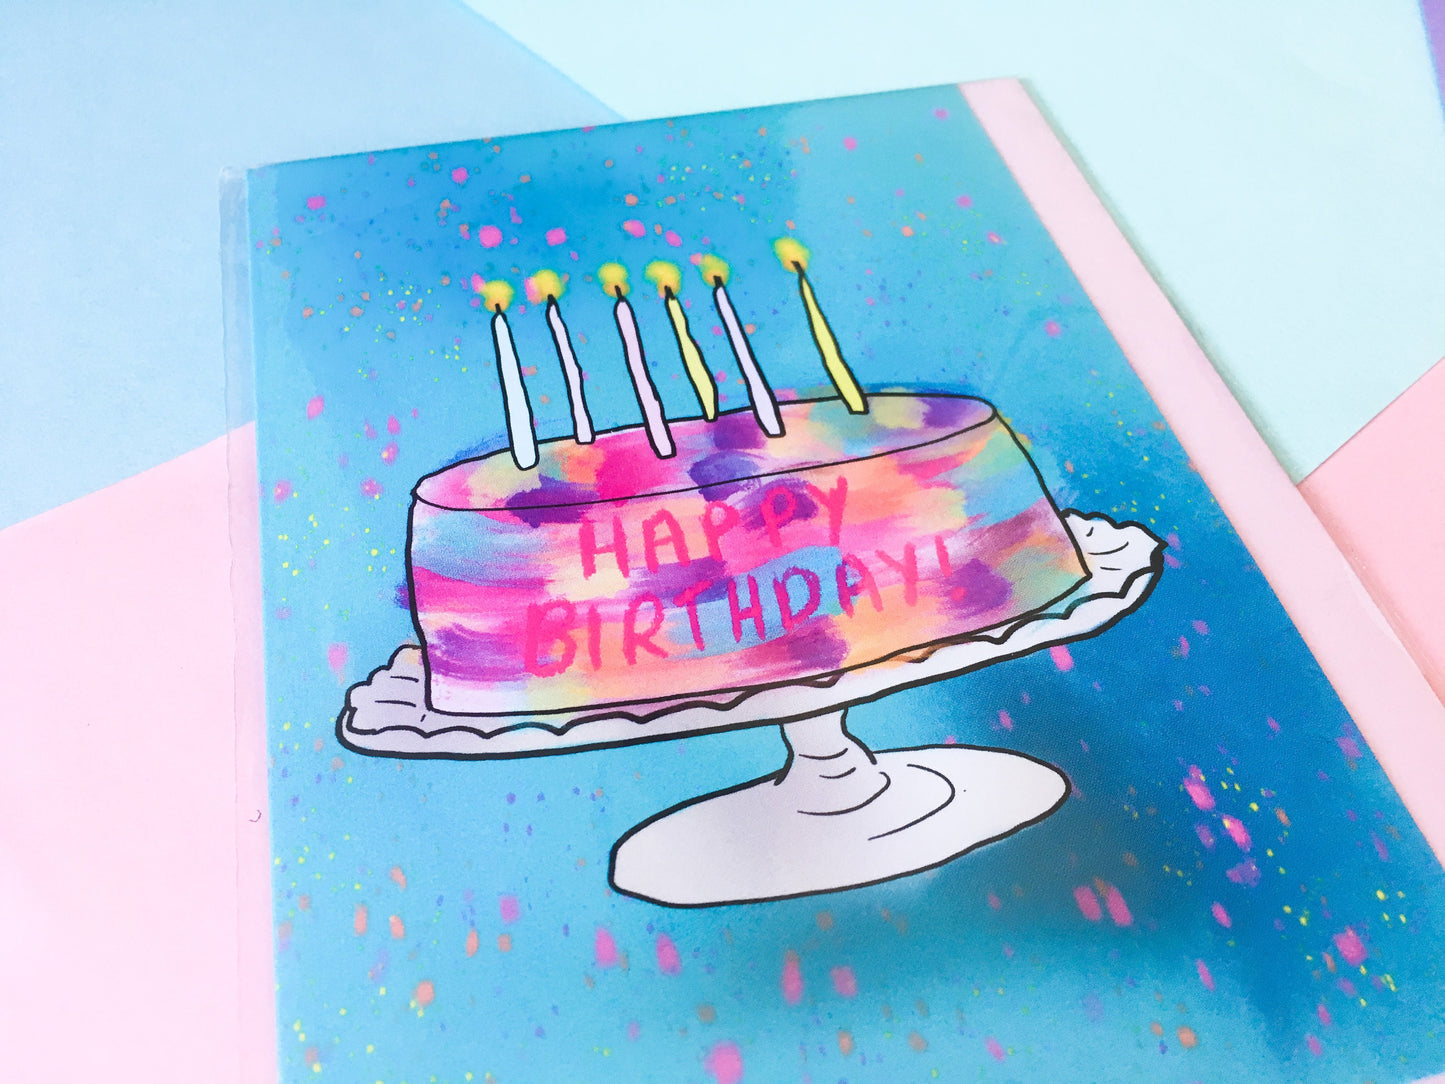 Happy Birthday Cake Card, Colourful Birthday